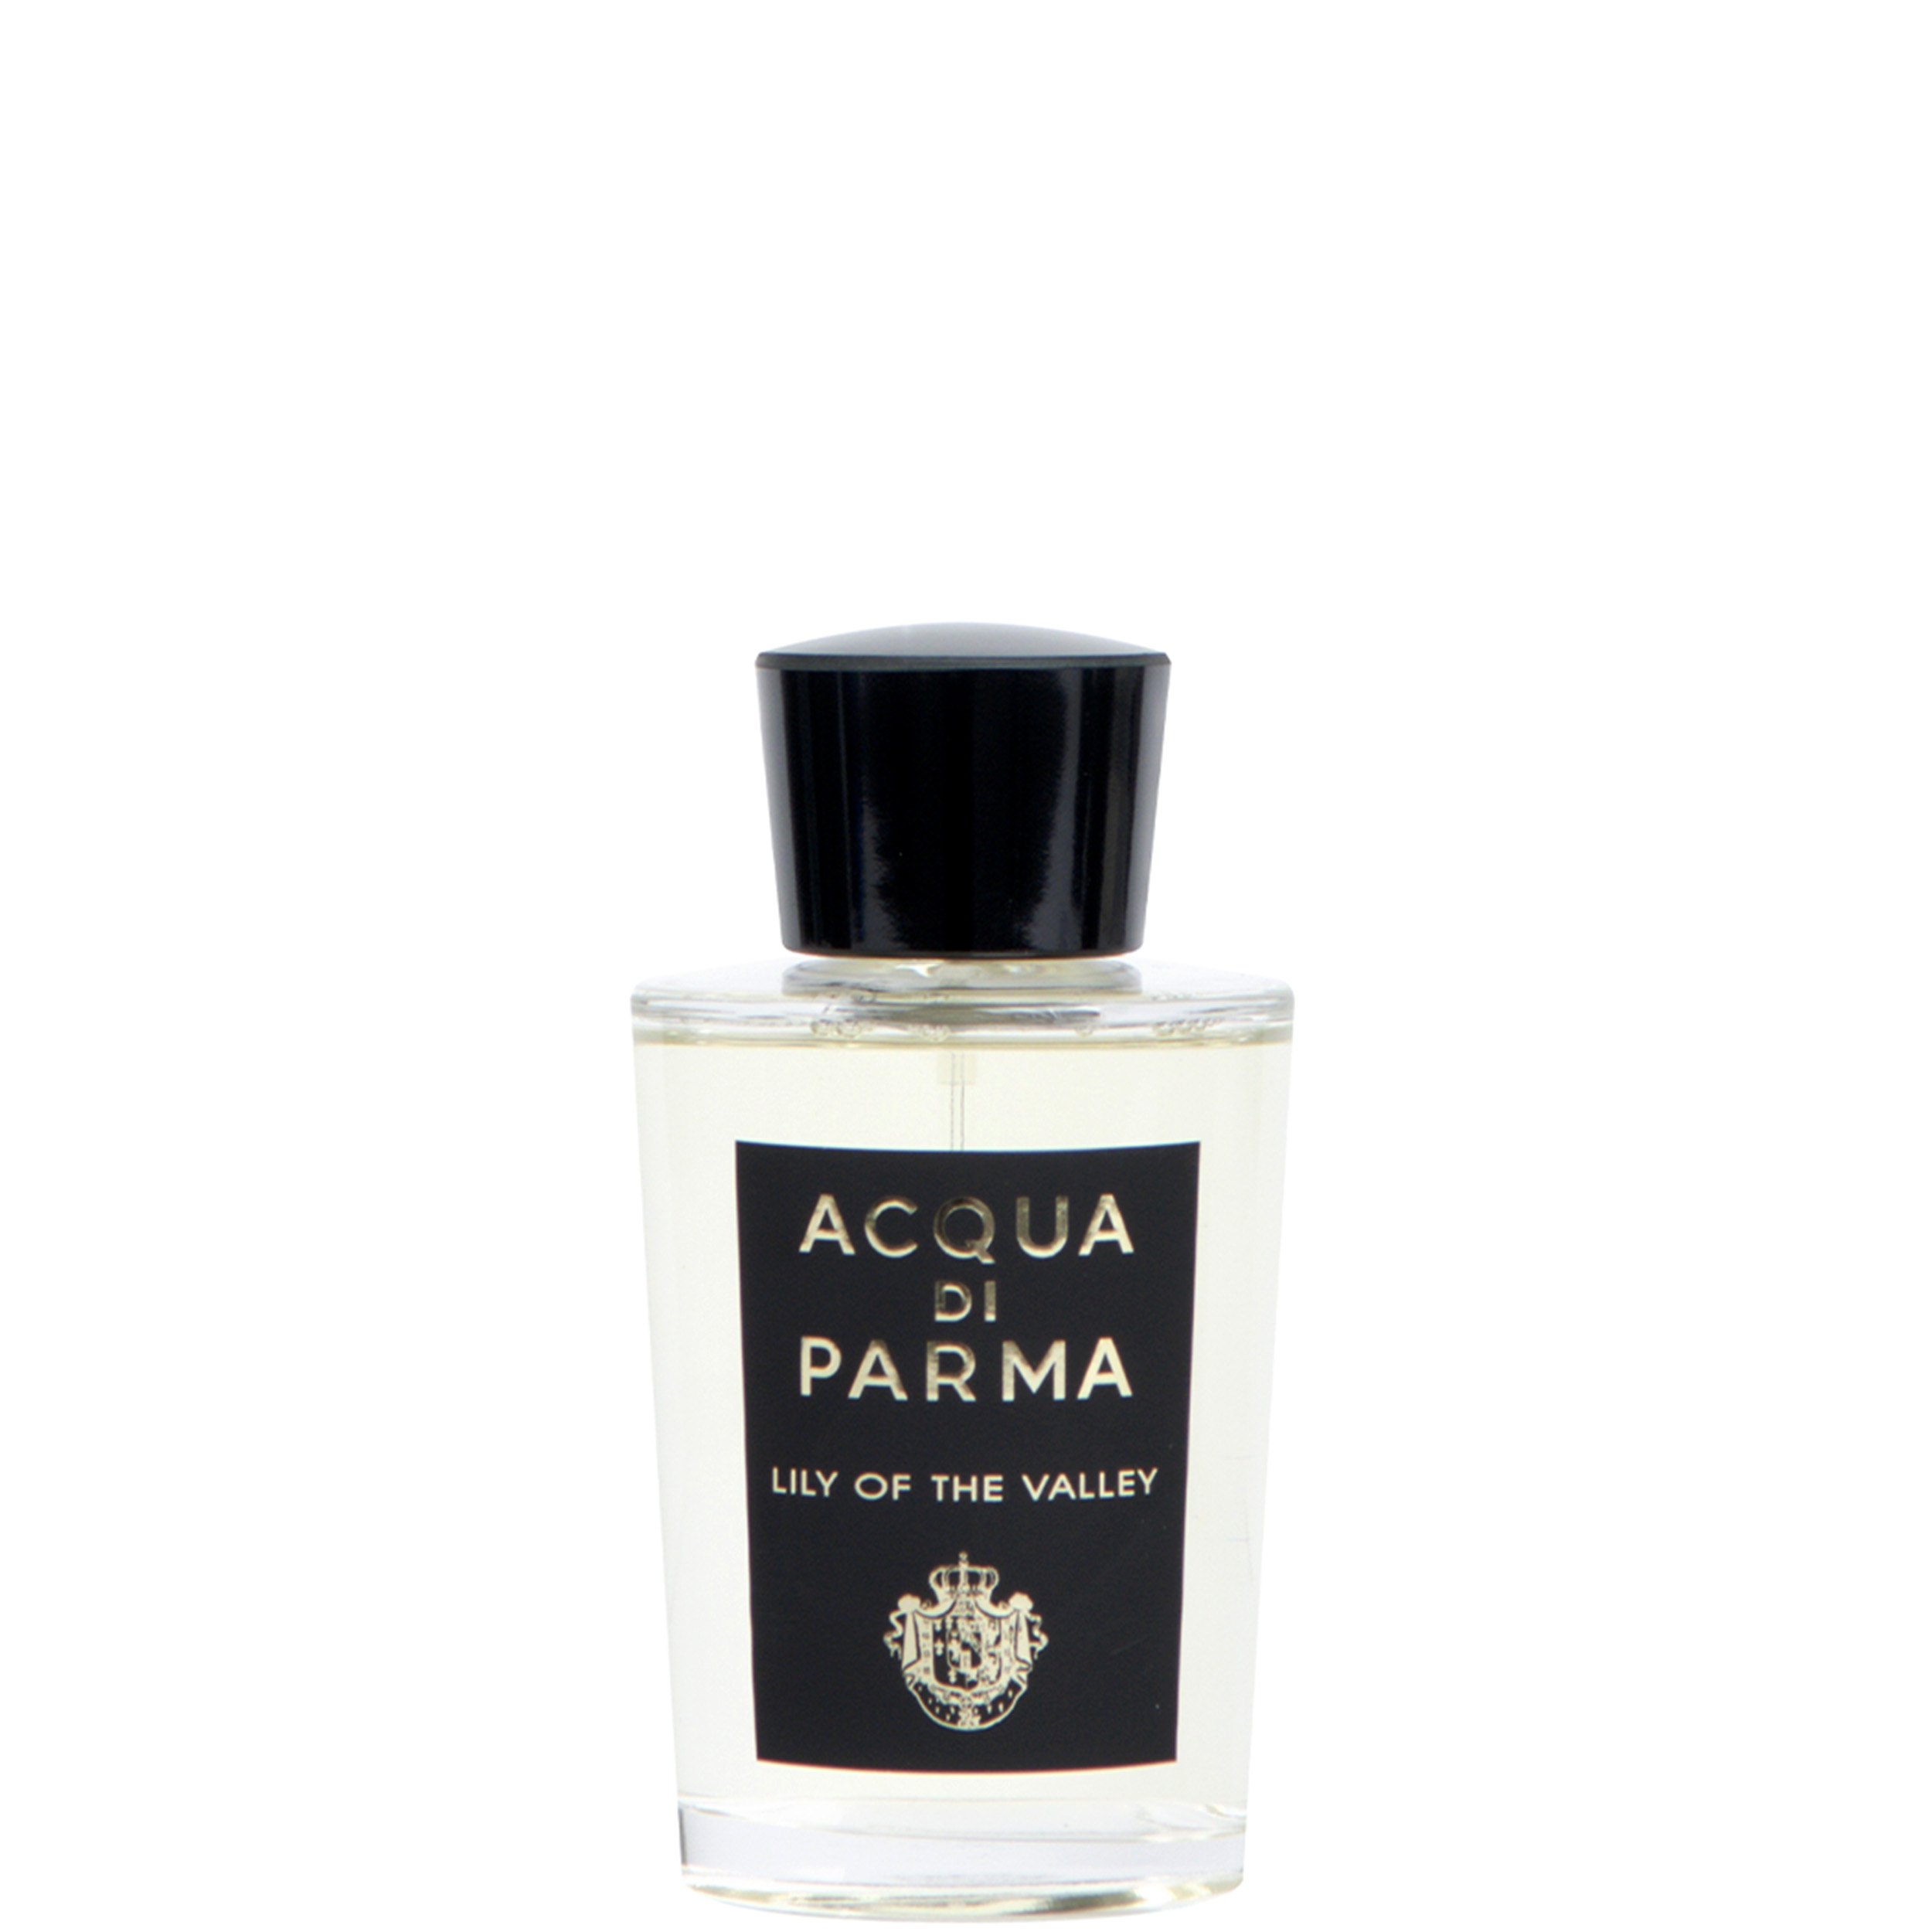 Acqua Di Parma ’Lily Of The Valley’ 100ml EDC Concentrate Fragrance